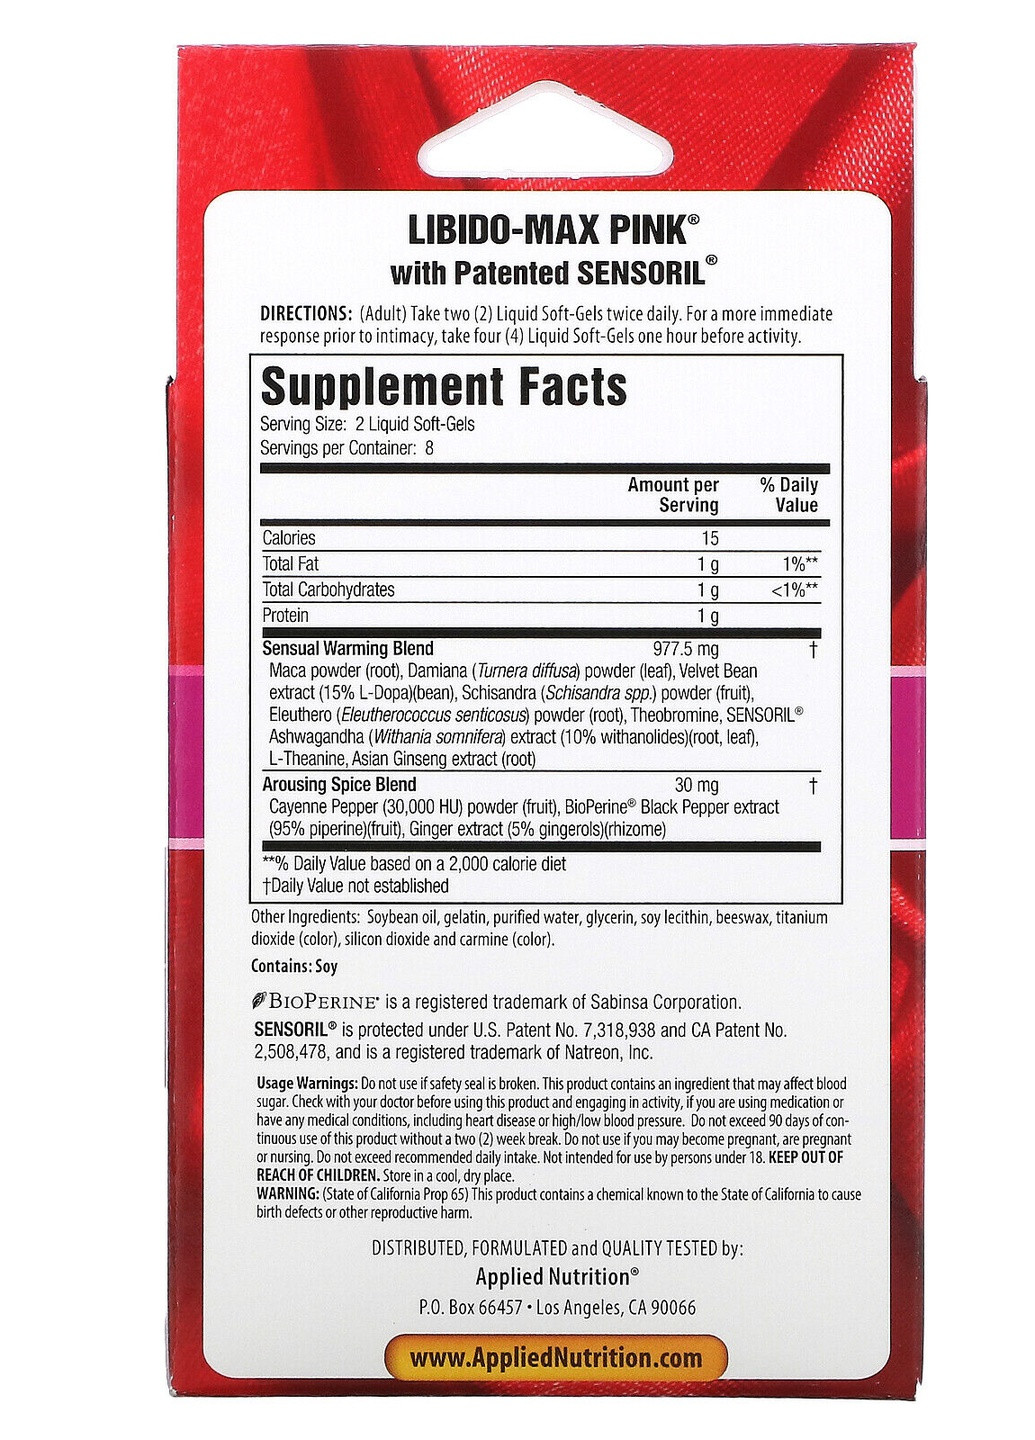 Мультивитамины для женщин Libido-Max Pink, For Women 16 Fast-Acting Liquid Soft-Gels Applied Nutrition (254916593)